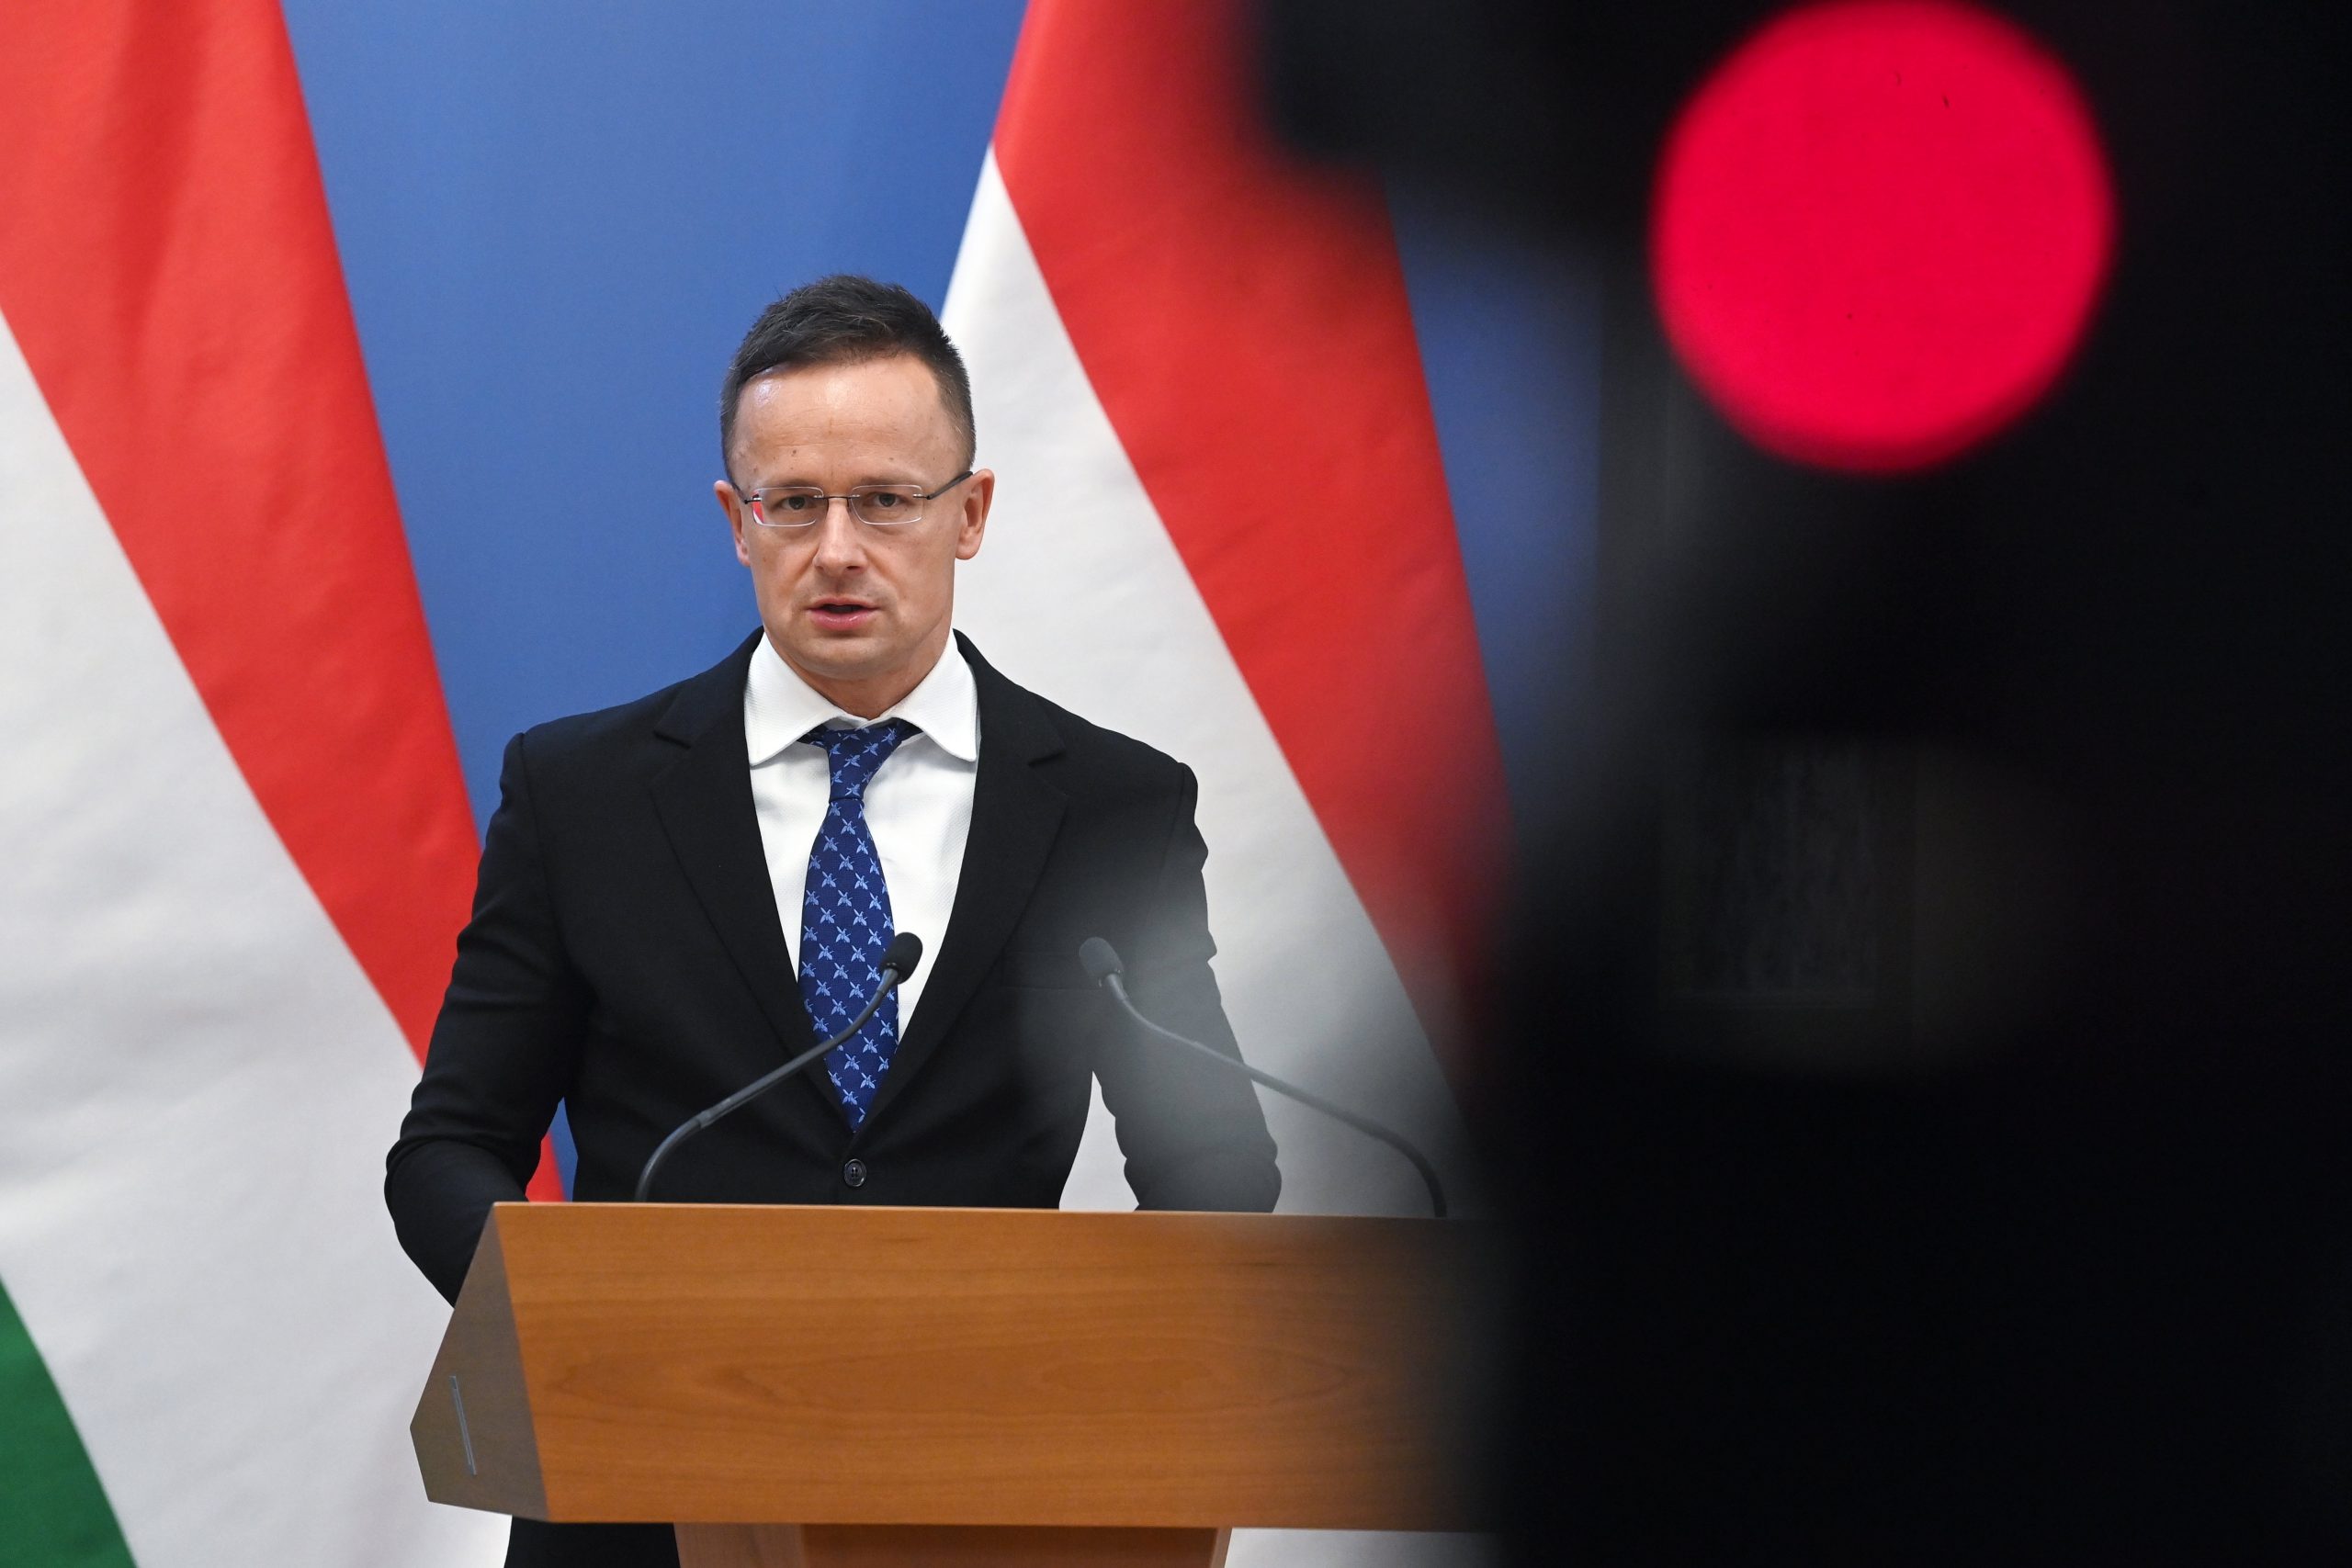 Press Roundup: Hungary Calls for Calm over Ukraine